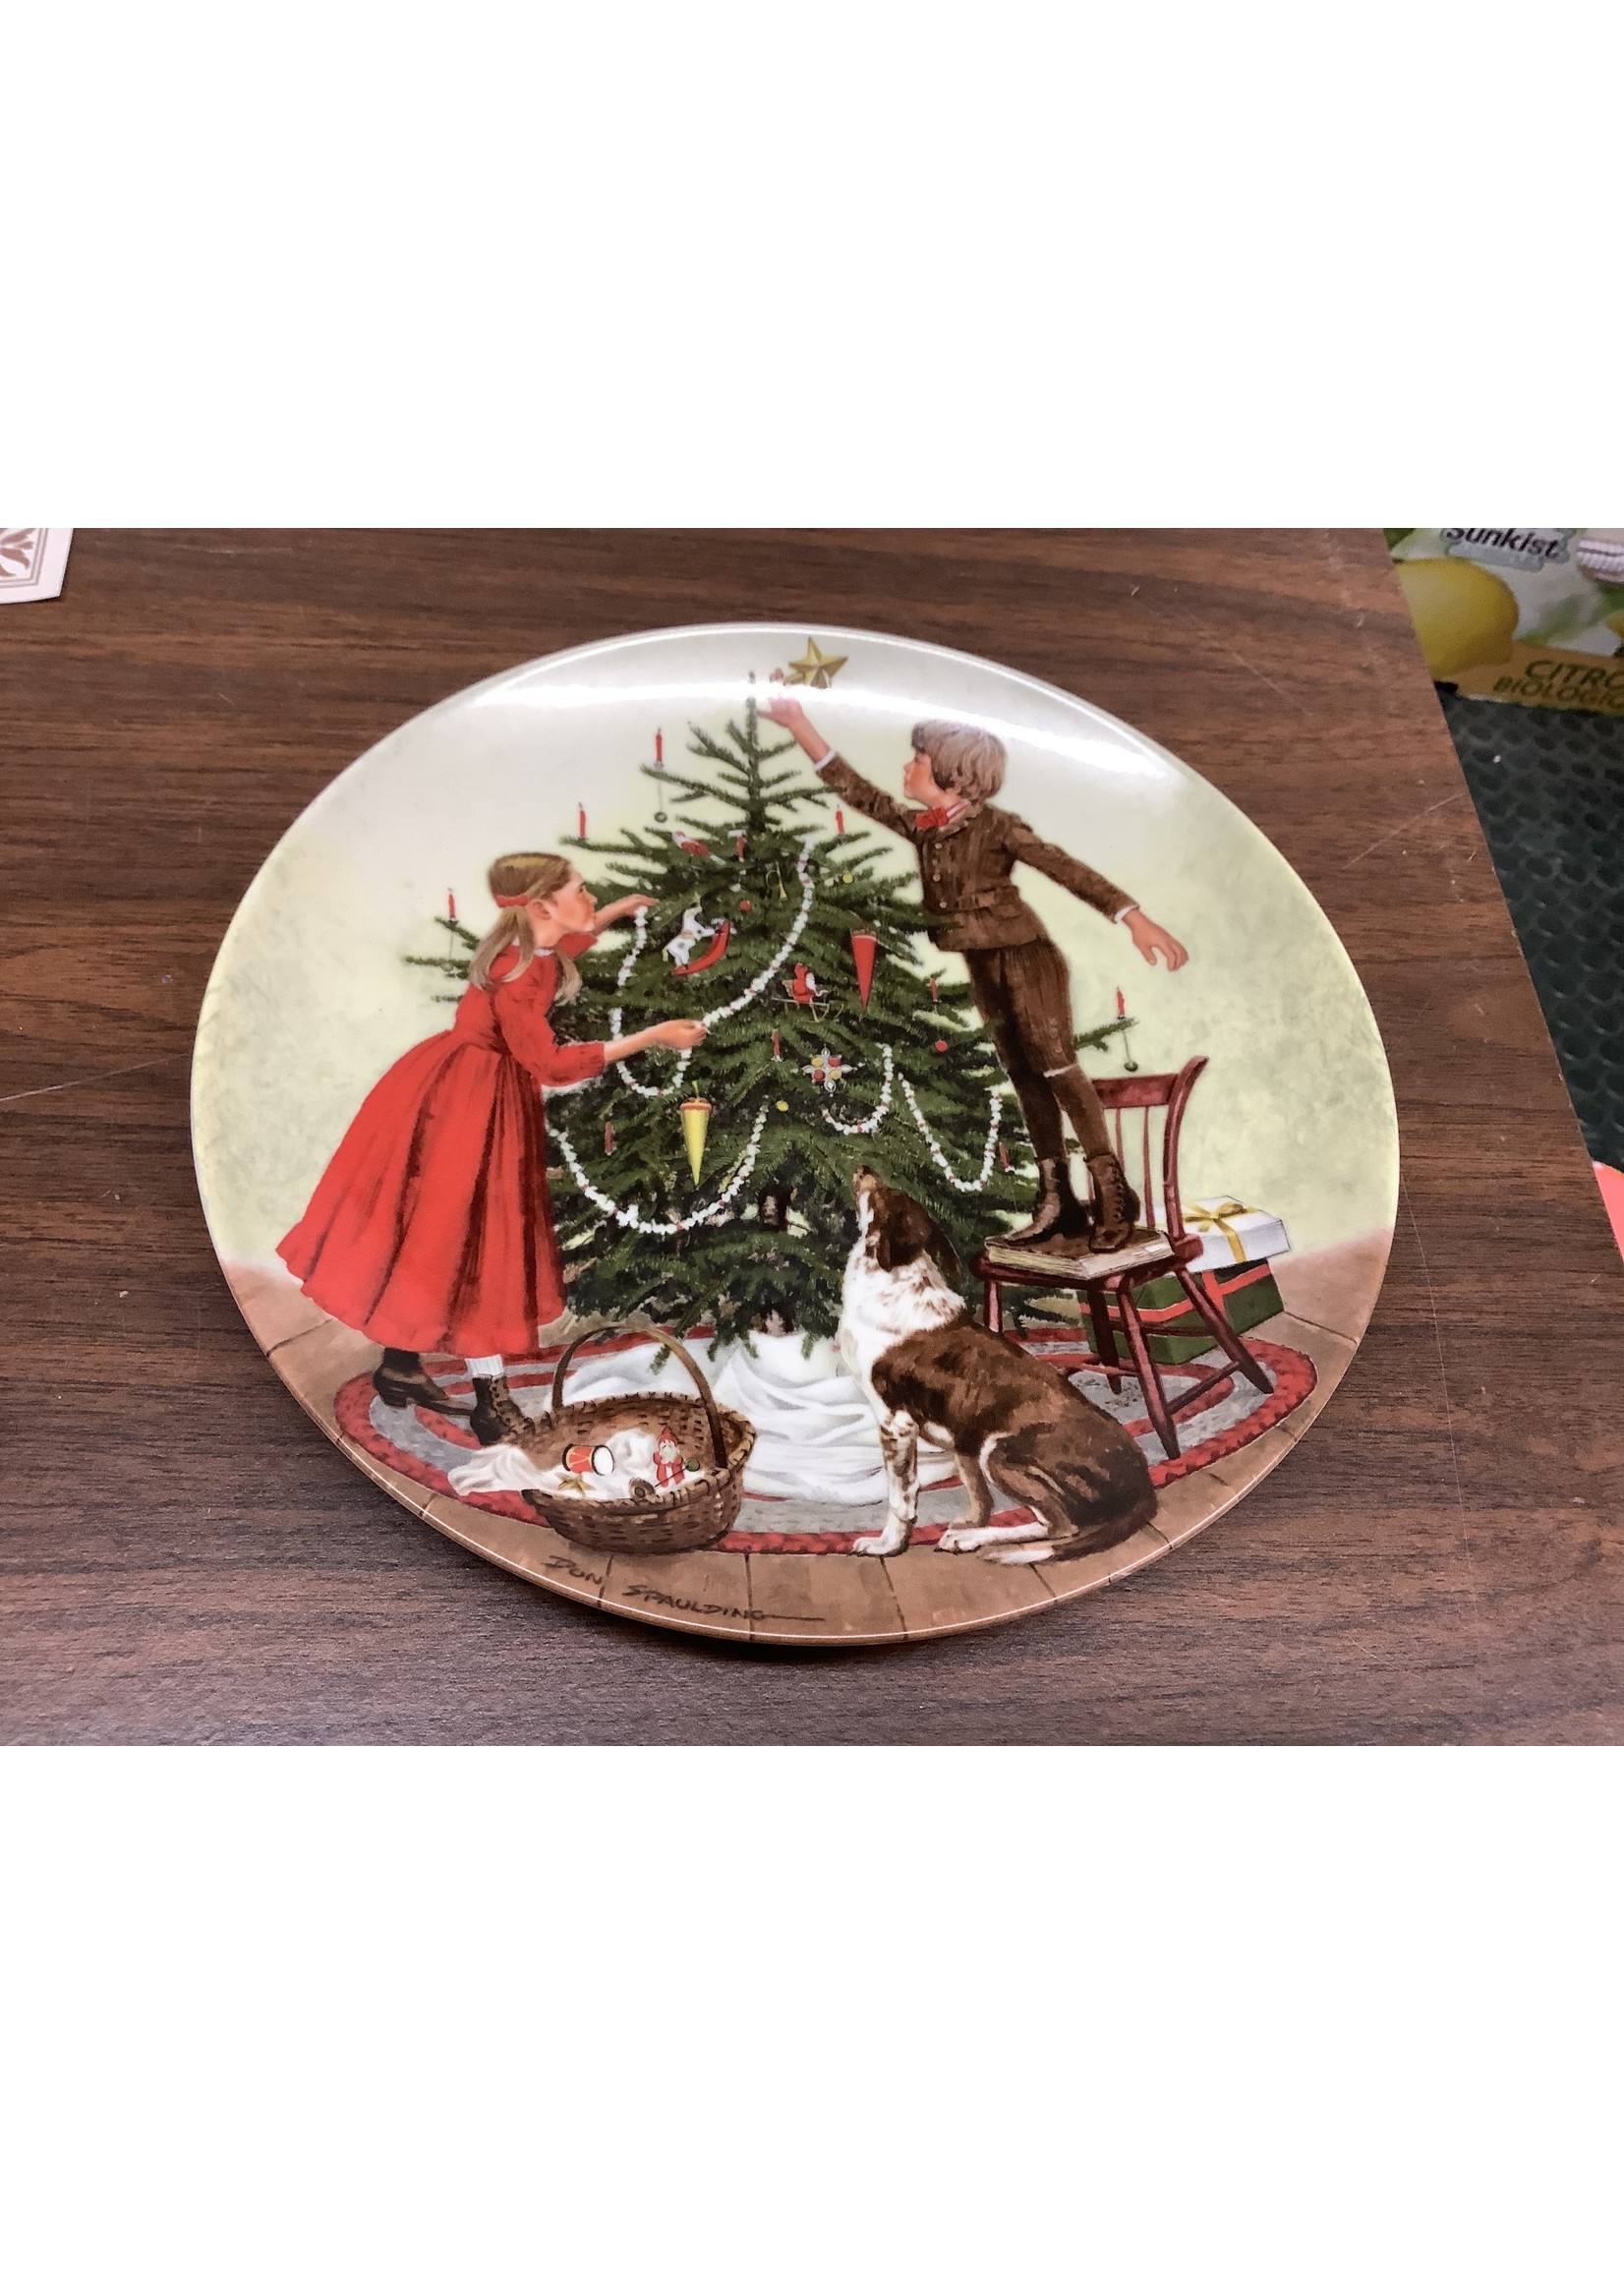 The Bradford Exchange Collectors Plate “Christmas” Bradex-No. 84-K41-2.6